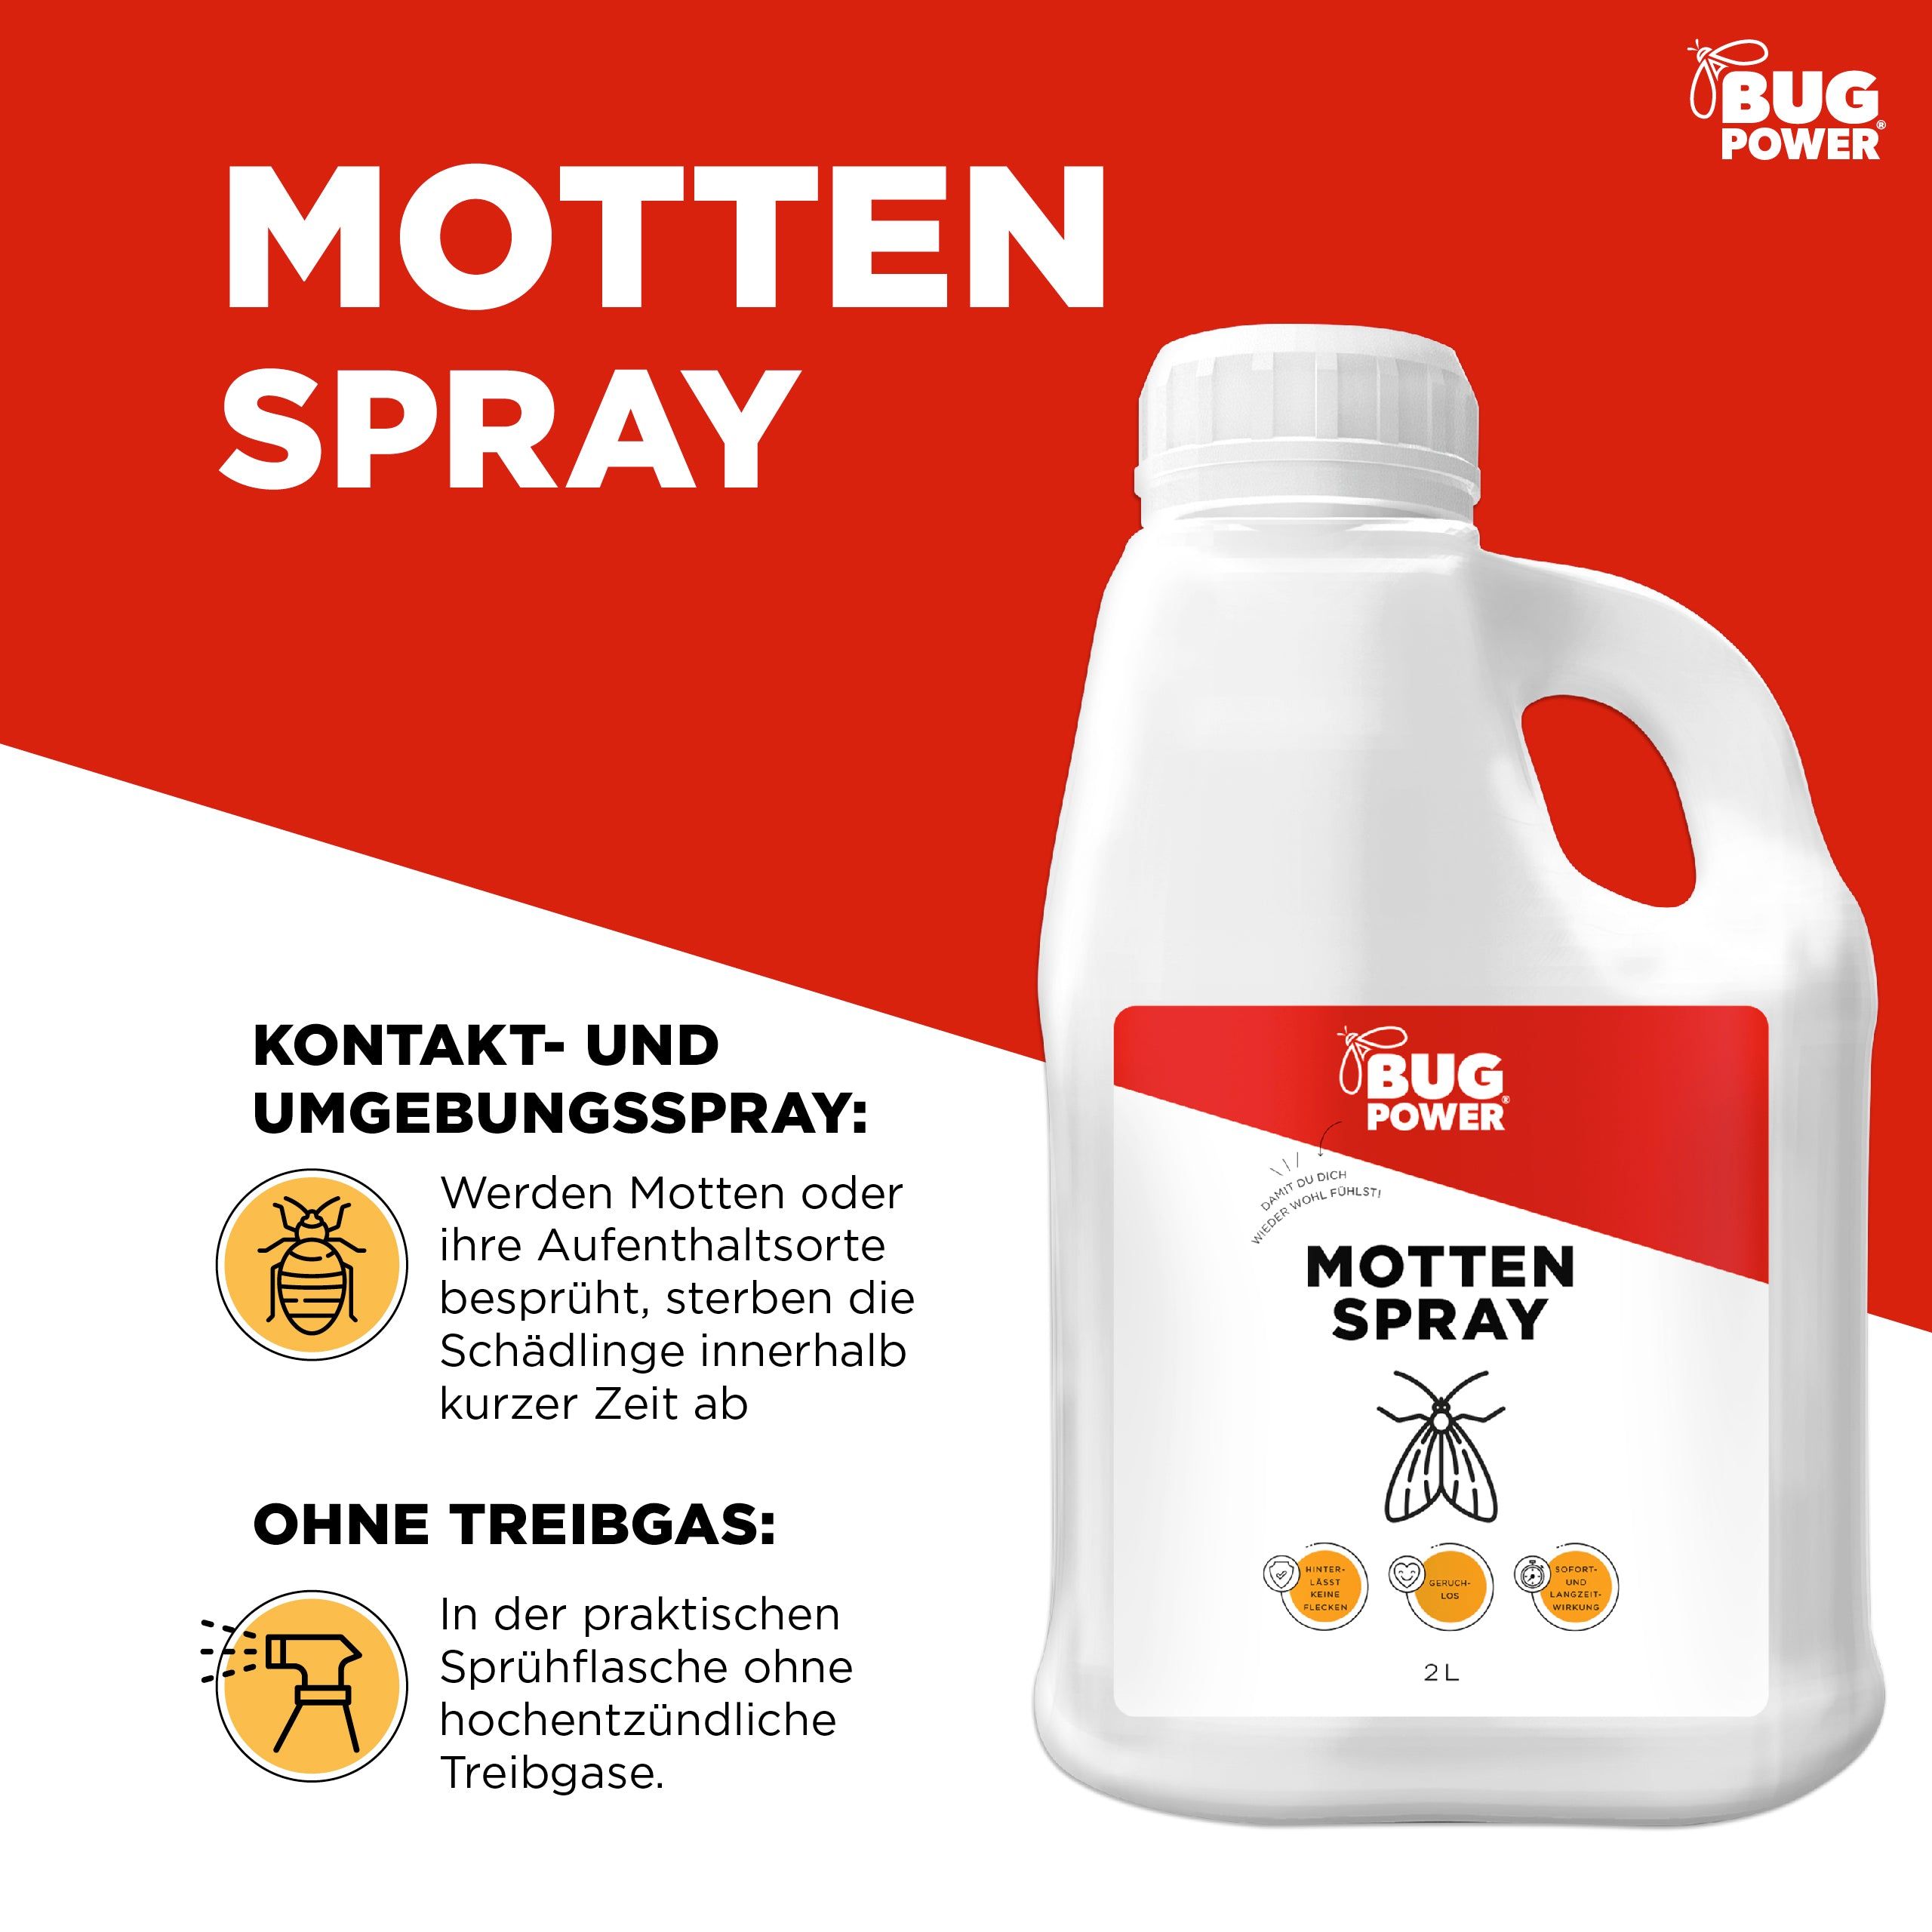 BugPower Motten Spray